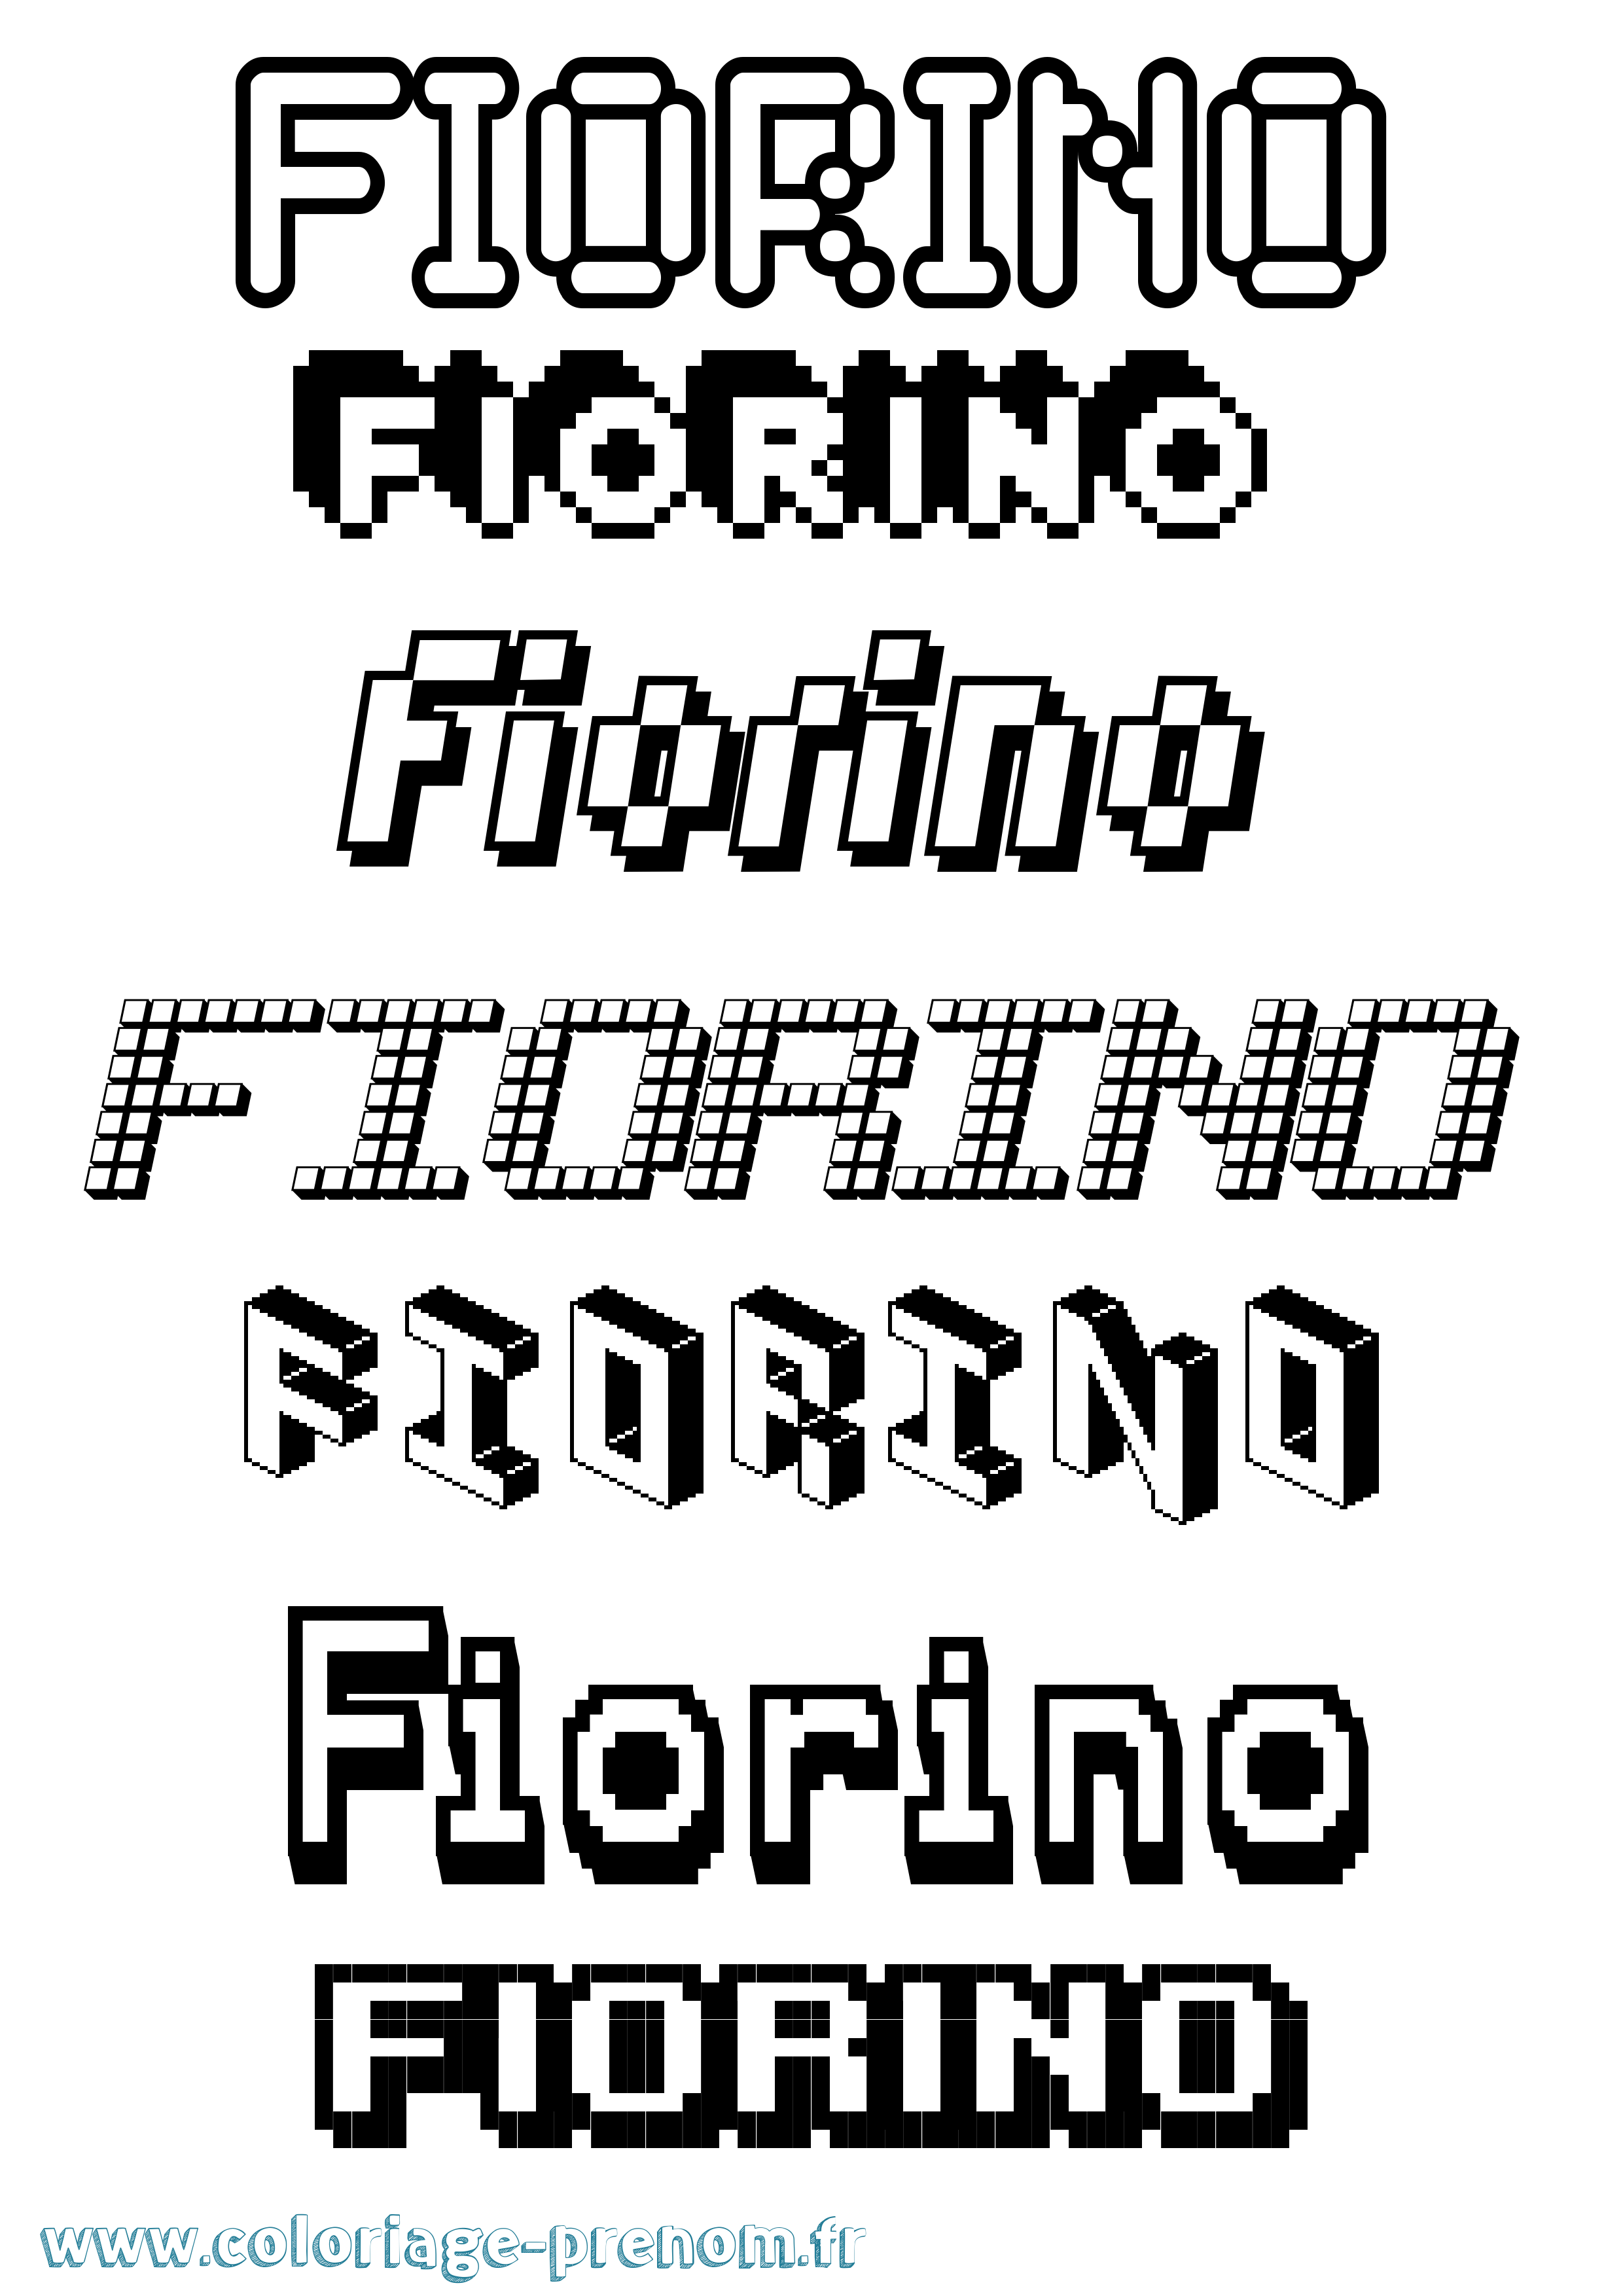 Coloriage prénom Fiorino Pixel